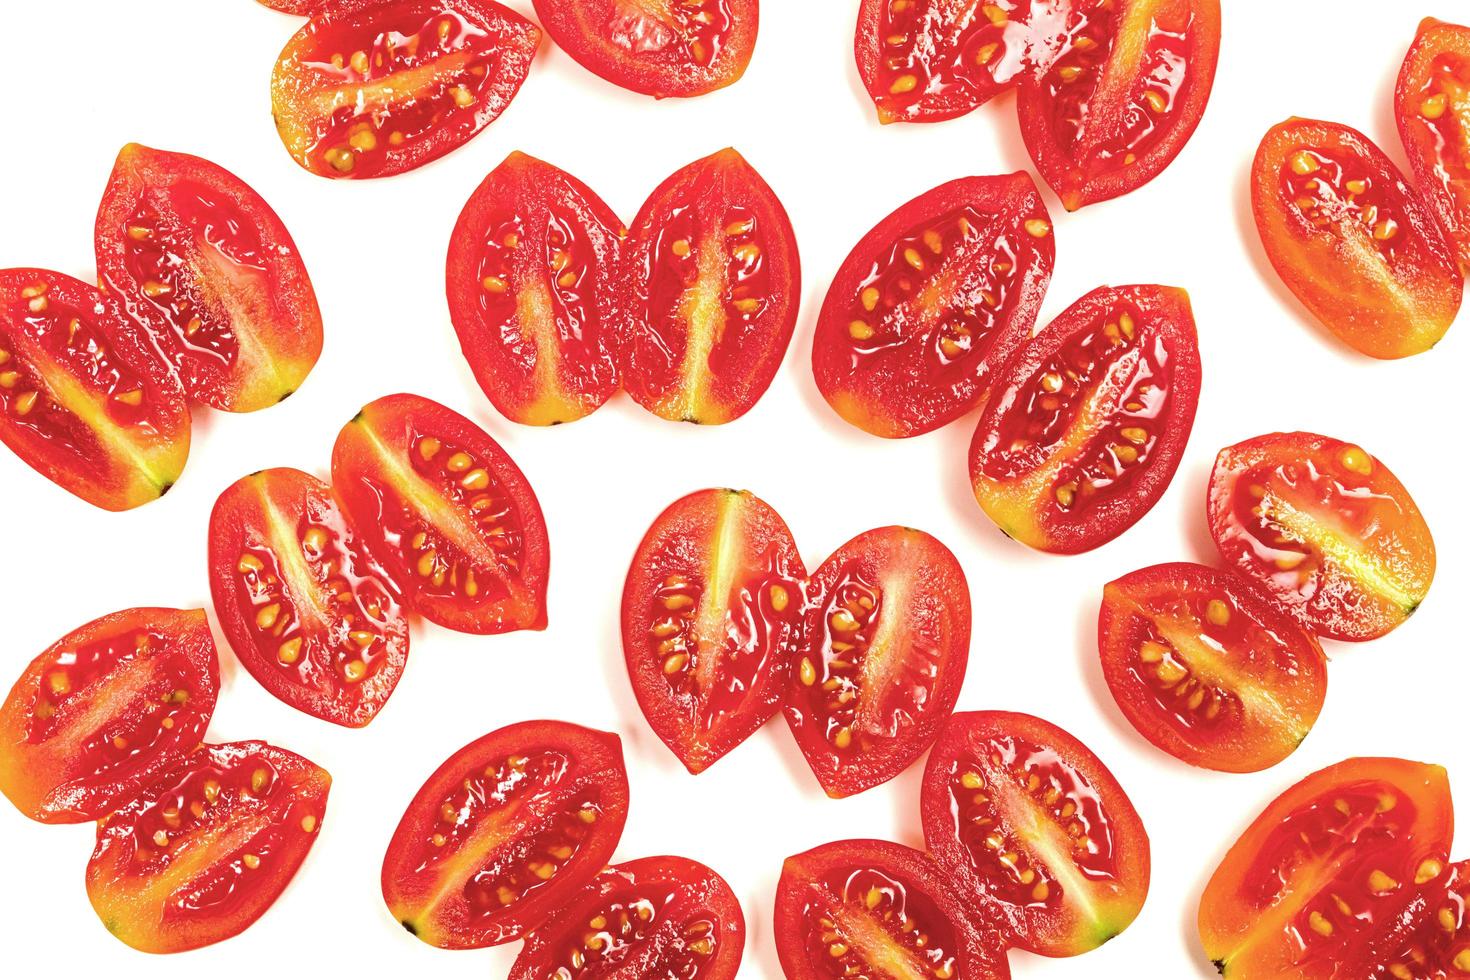 tomate cereja isolado no fundo branco foto